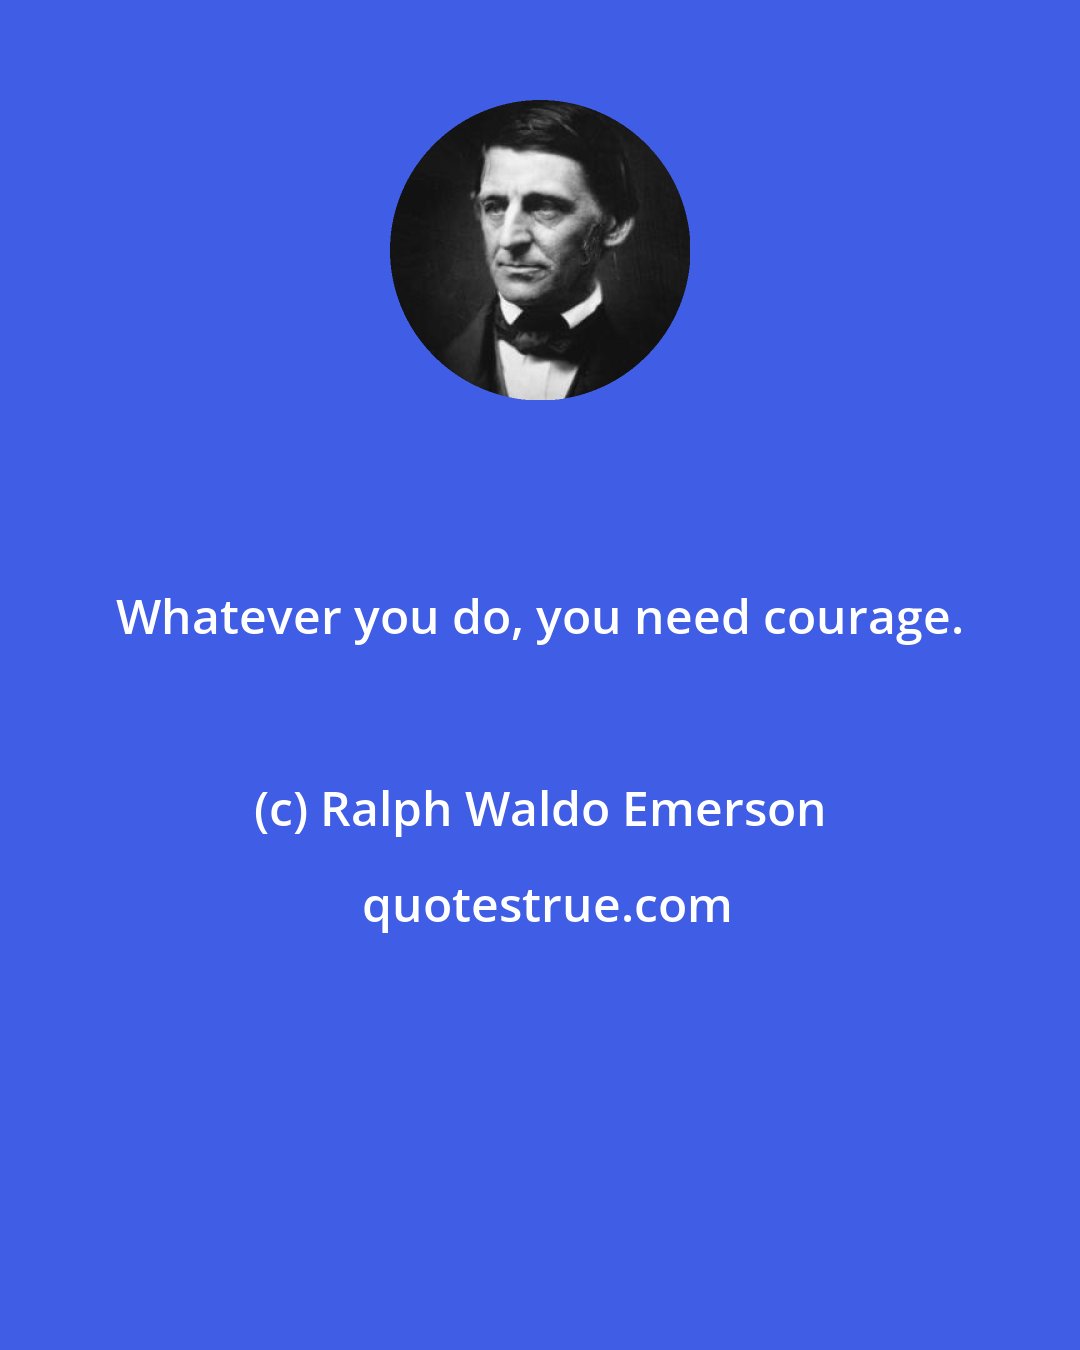 Ralph Waldo Emerson: Whatever you do, you need courage.